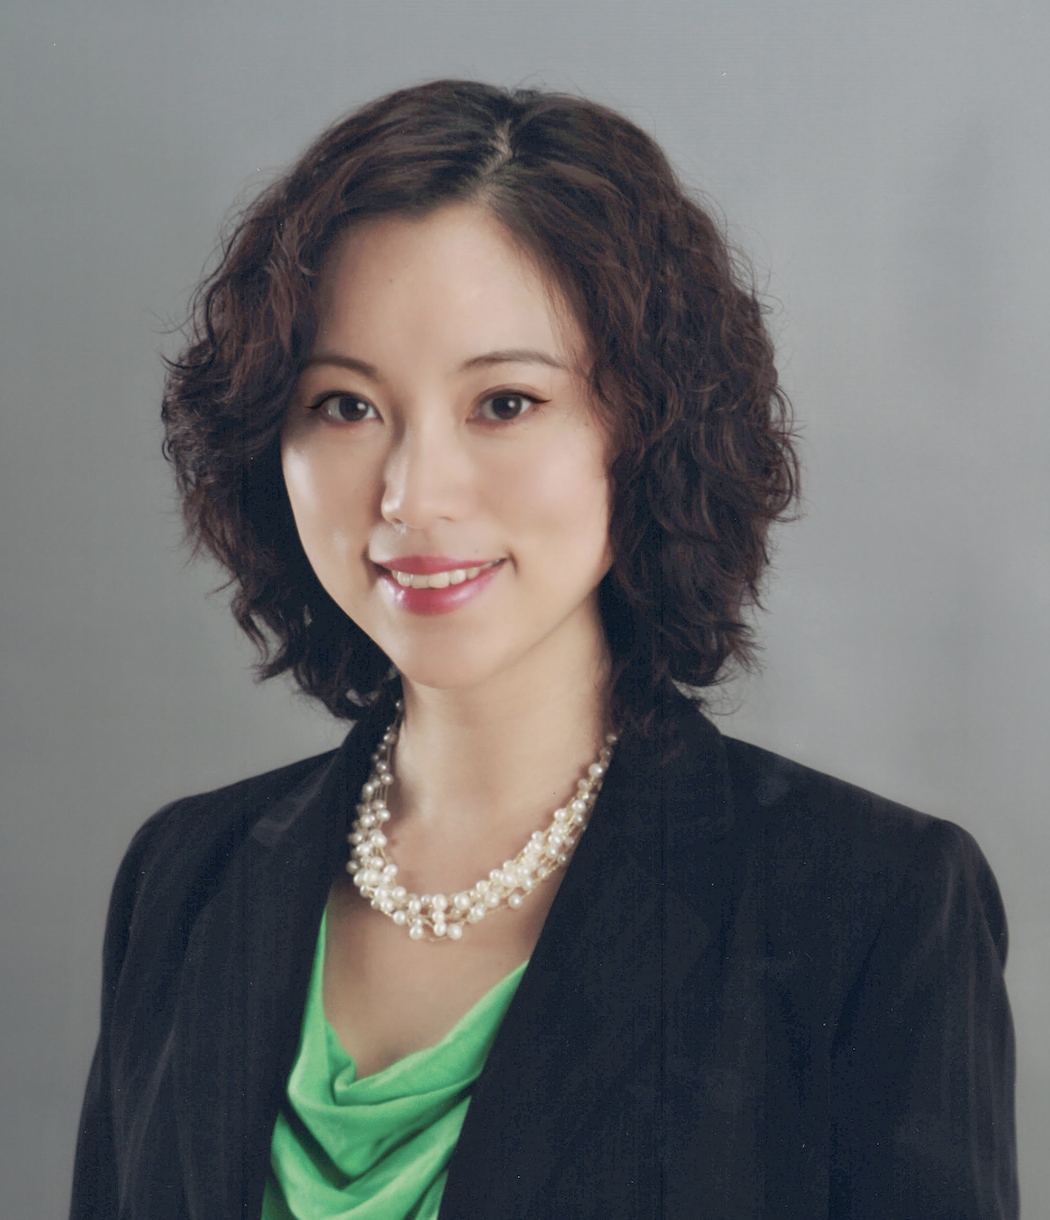 Profile image of Ying (Elissa) Lu